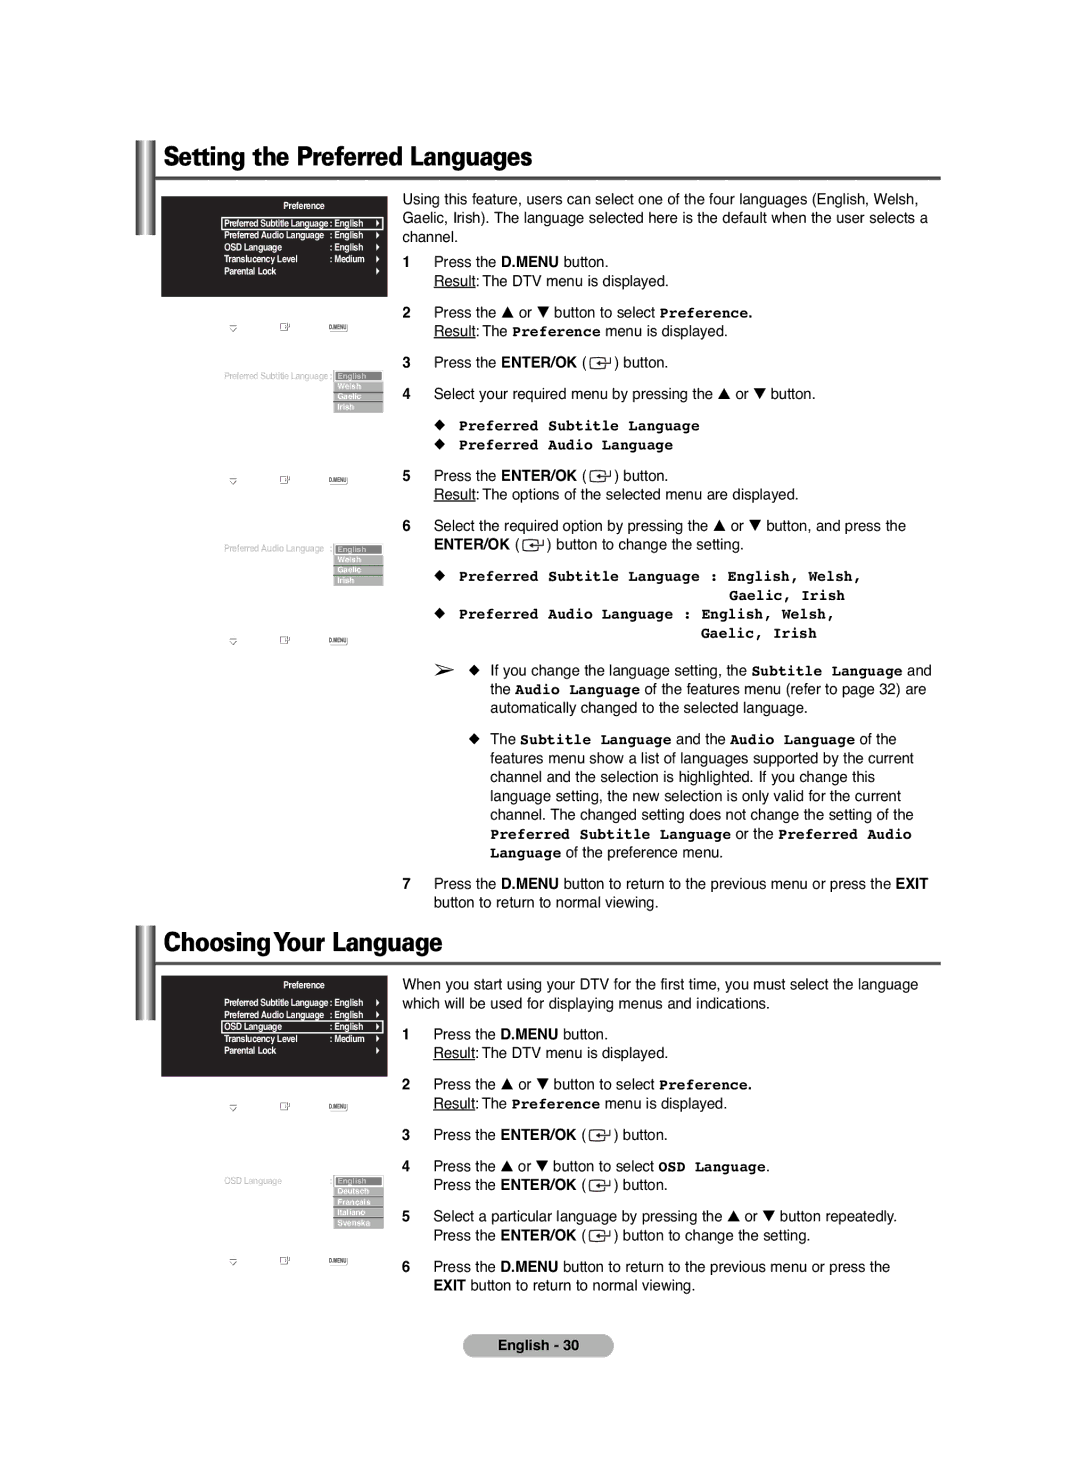 Samsung PS-42C6HD manual Setting the Preferred Languages, ChoosingYour Language 